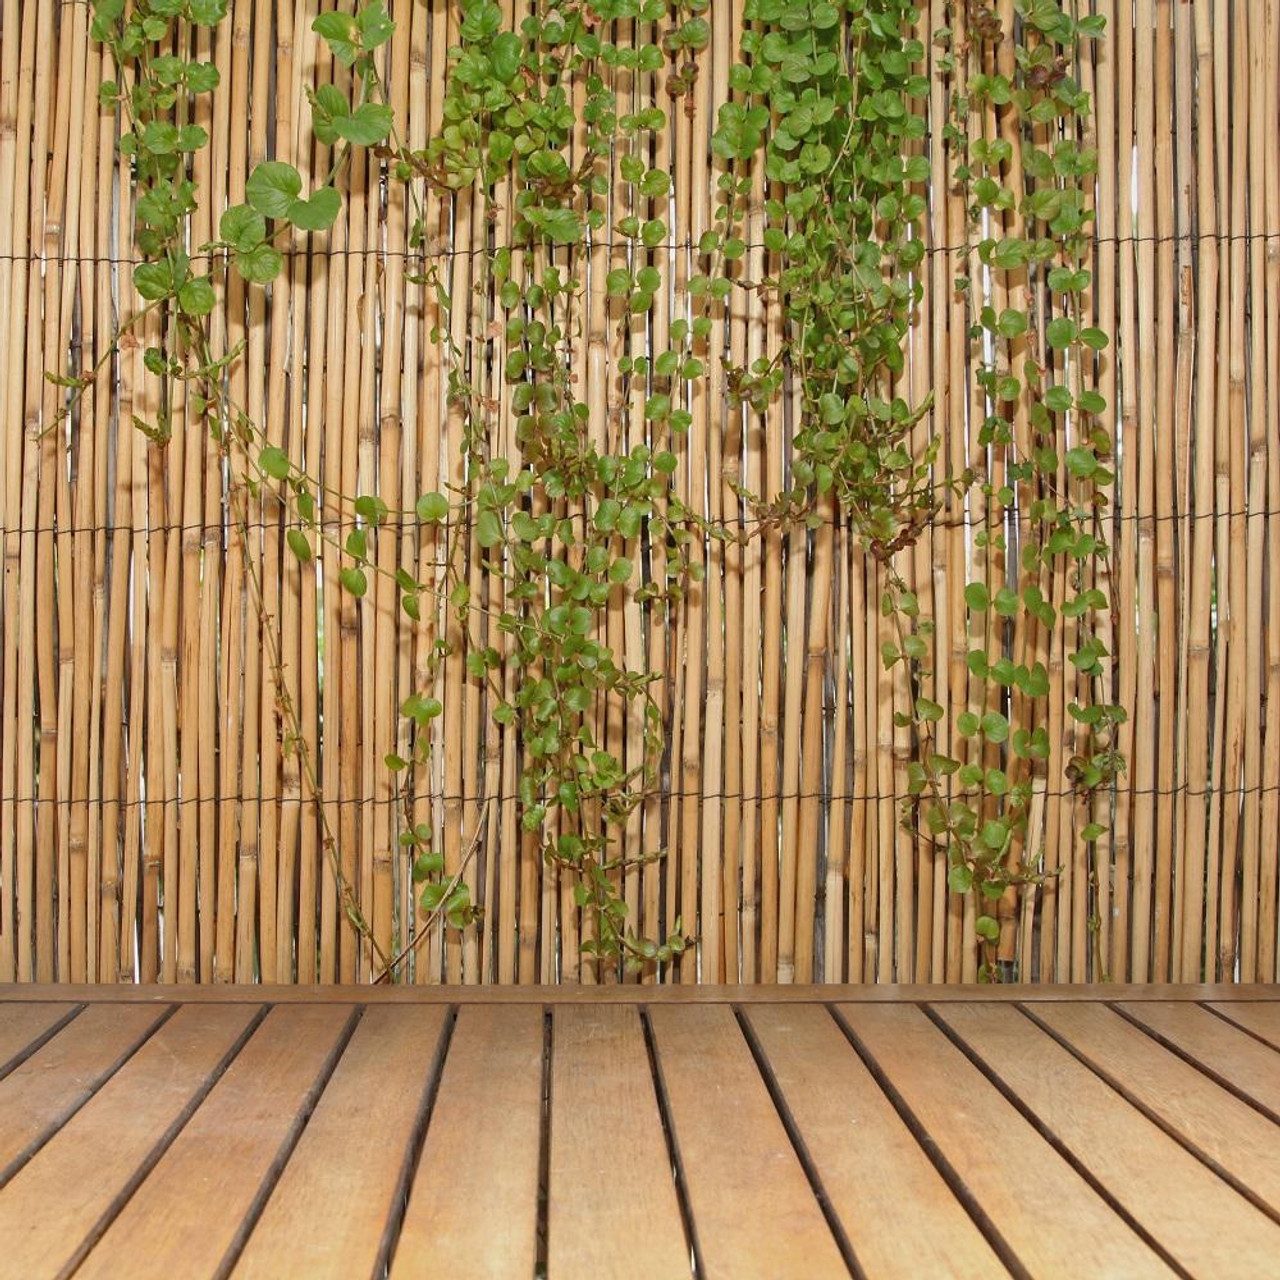 Bamboo Garden Fence | lupon.gov.ph